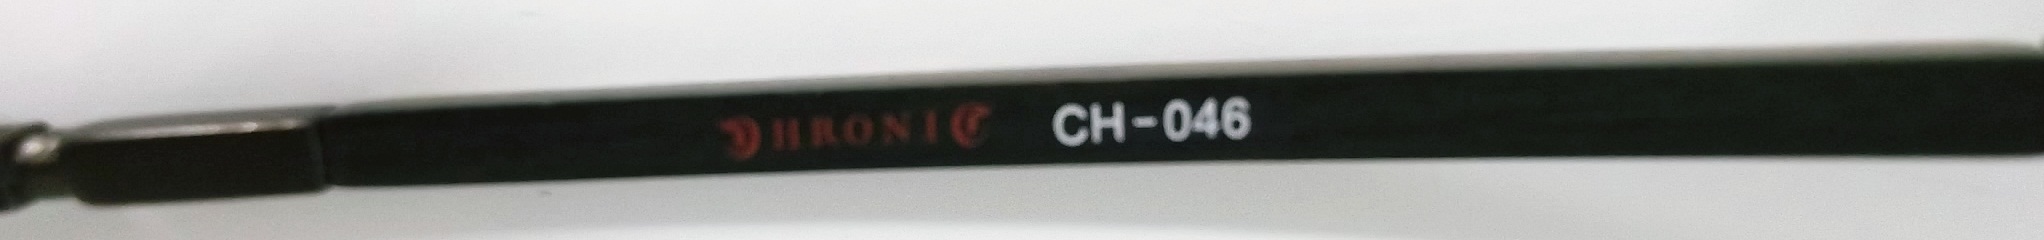 CHRONIC 041504